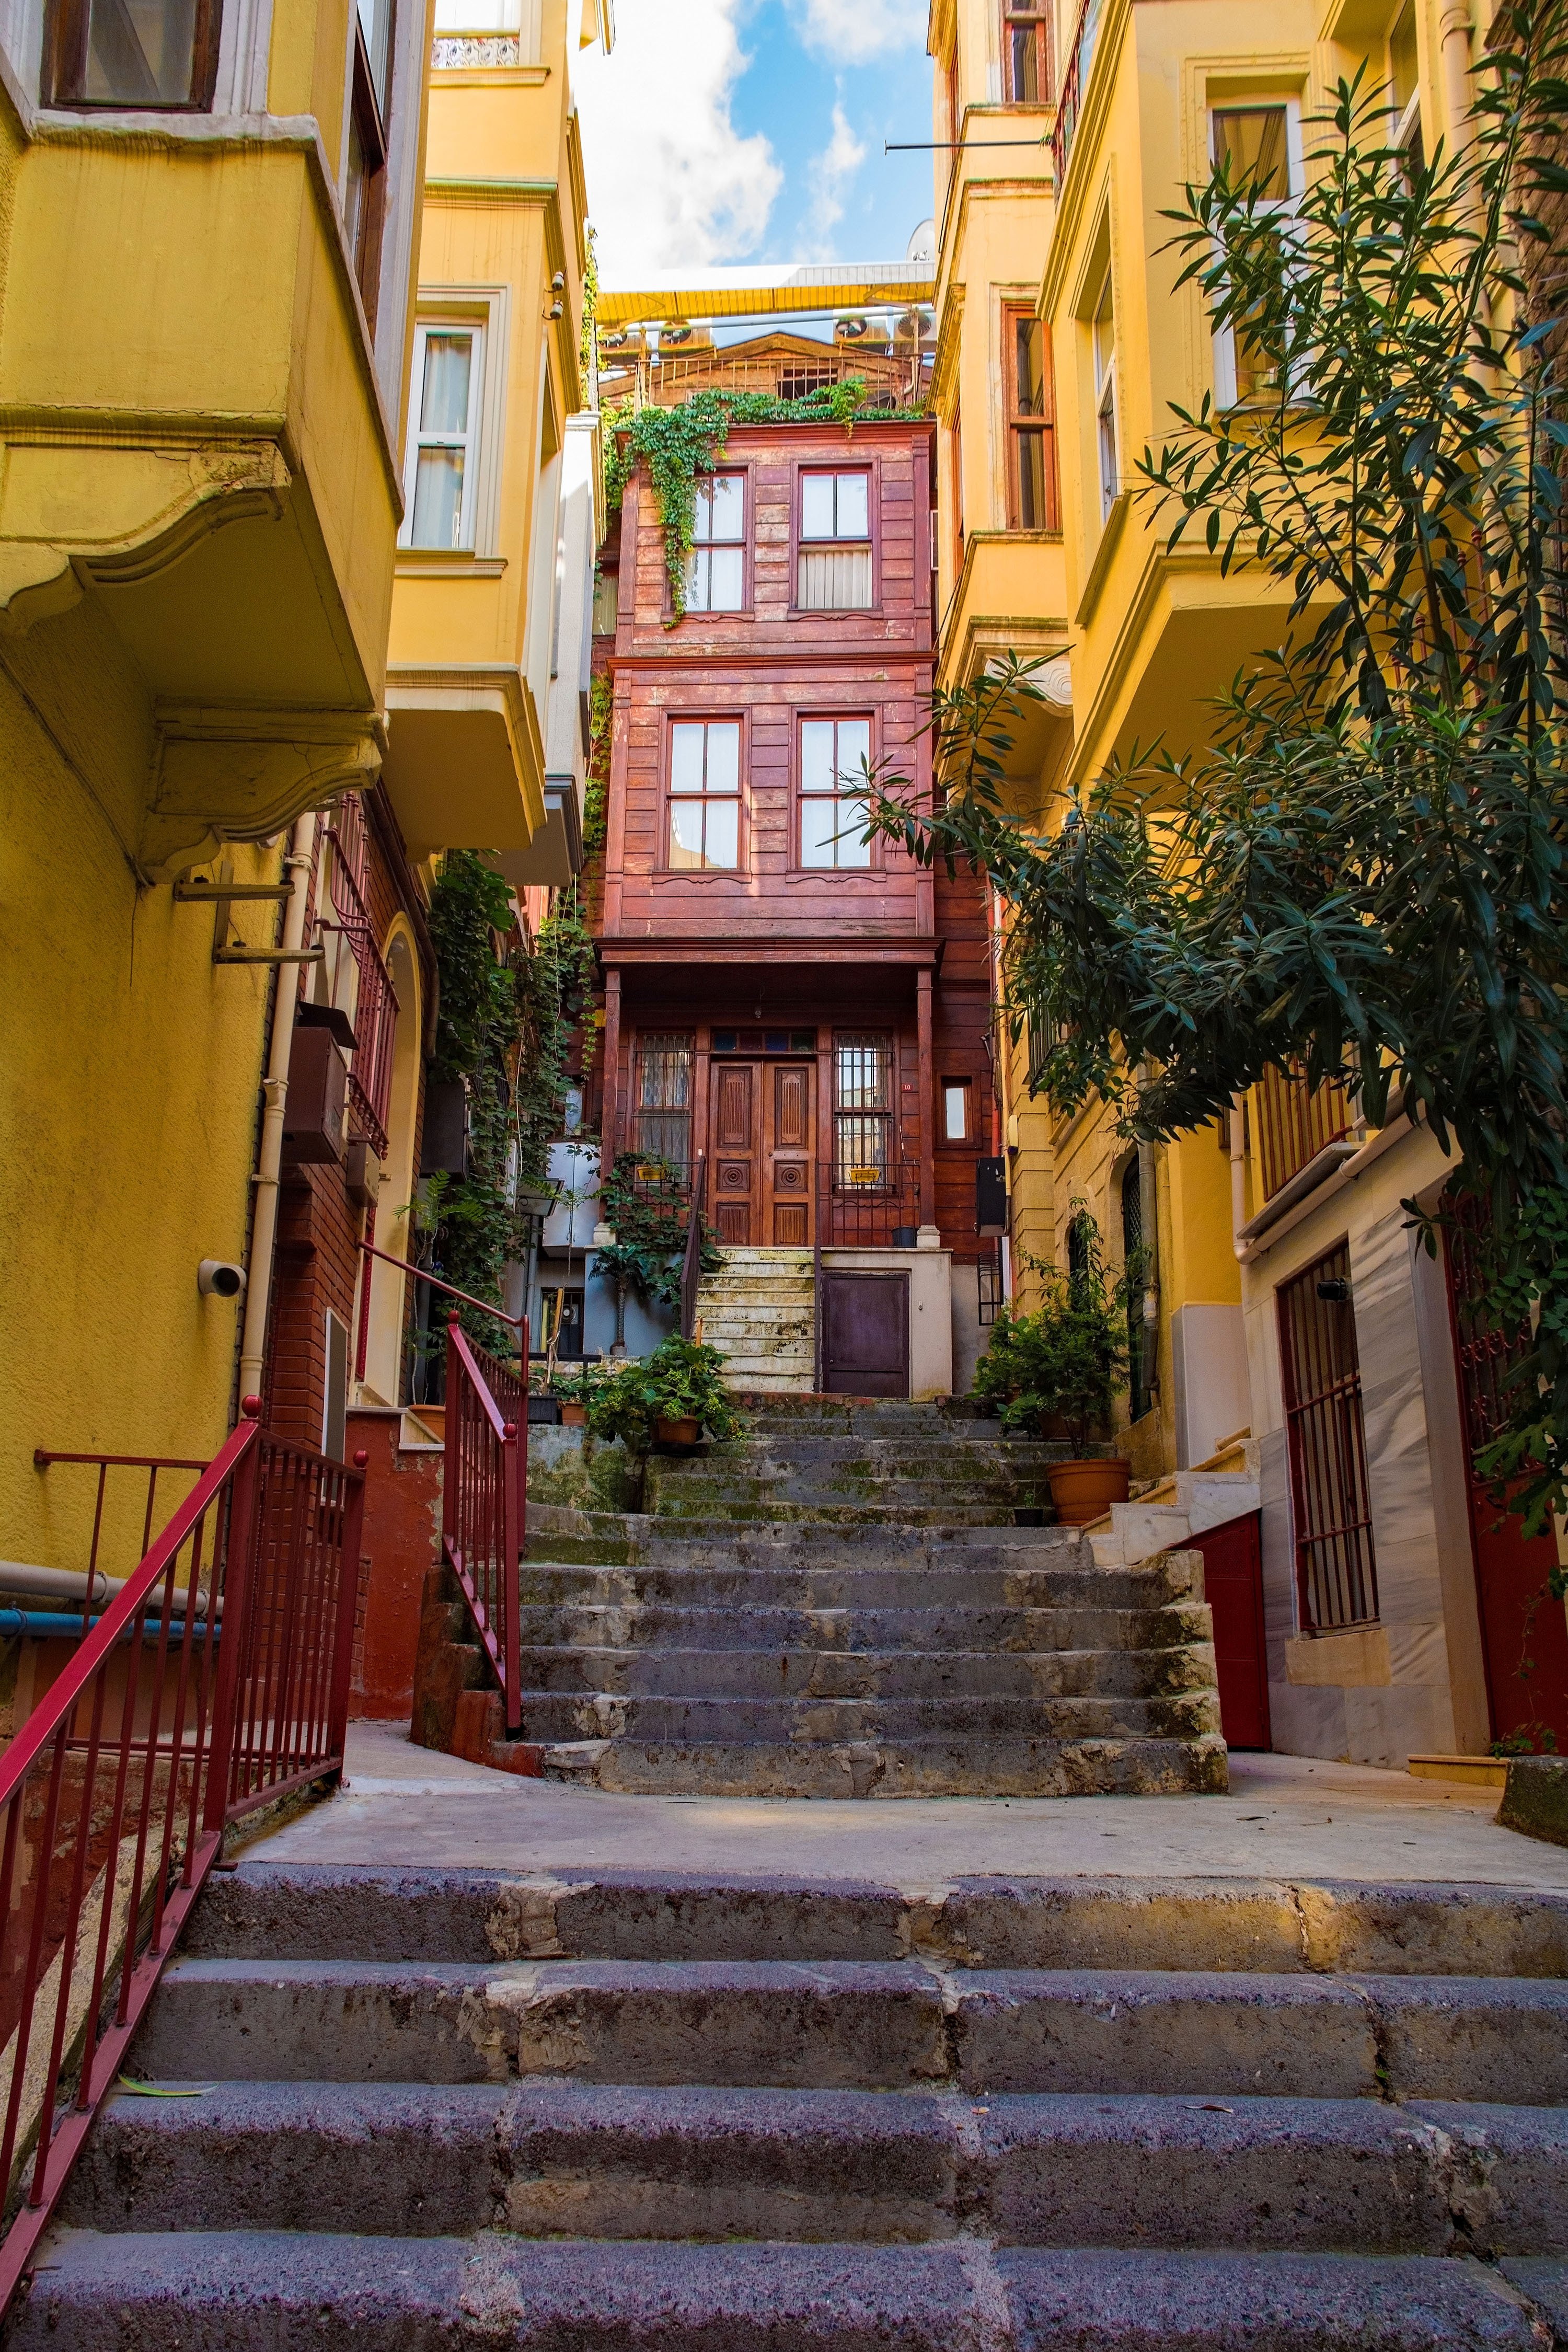 Jalan setapak bersejarah di Cihangir, Beyoğlu, Istanbul.  (Foto Shutterstock) 